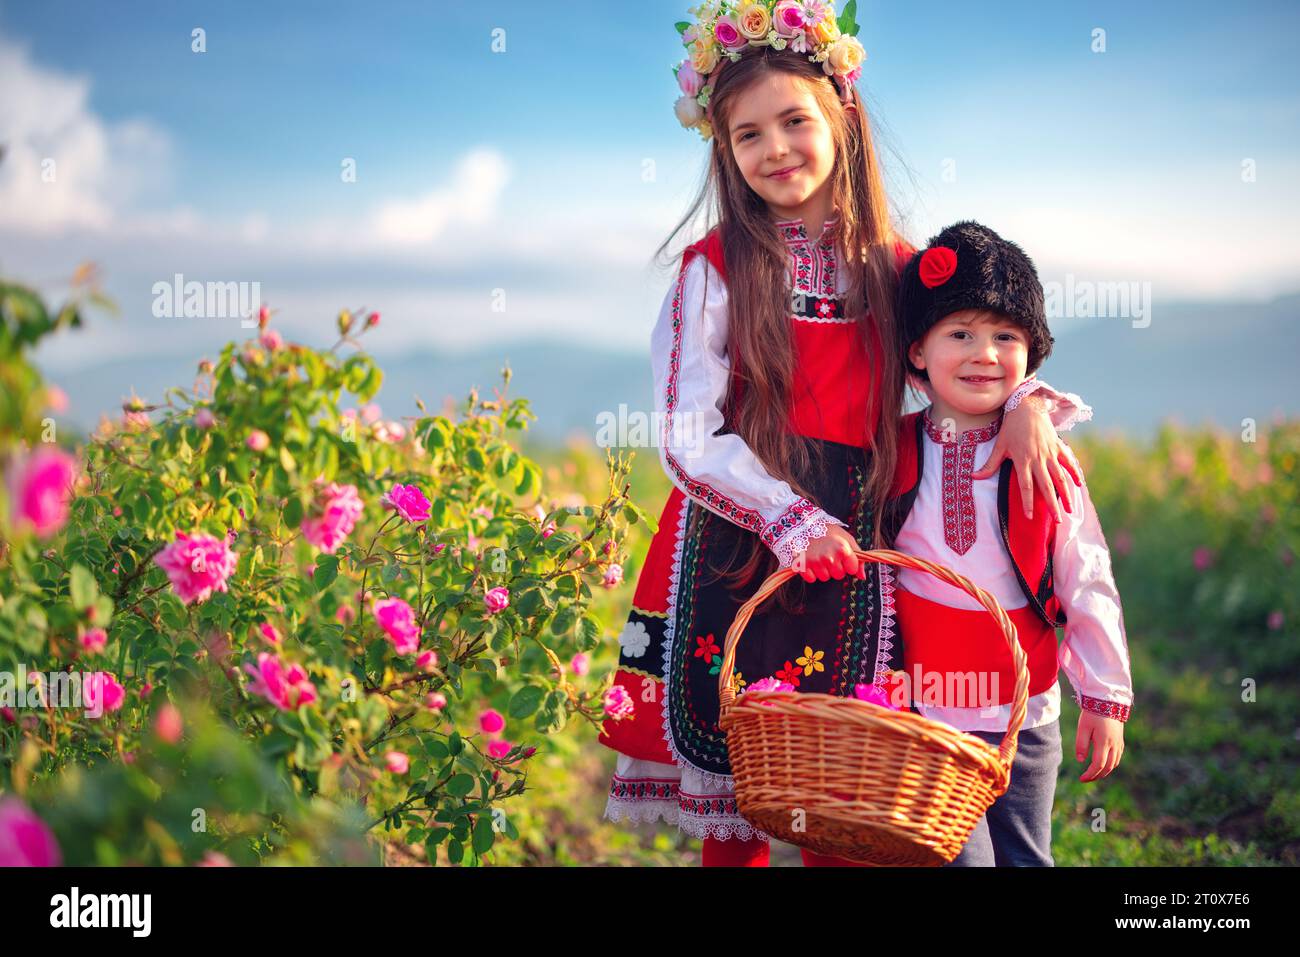 Bulgarian Rose Damascena field, Roses valley Kazanlak, Bulgaria. Boy and girl in ethnic folklore clothing harvesting oil-bearing roses at sunrise. Stock Photo